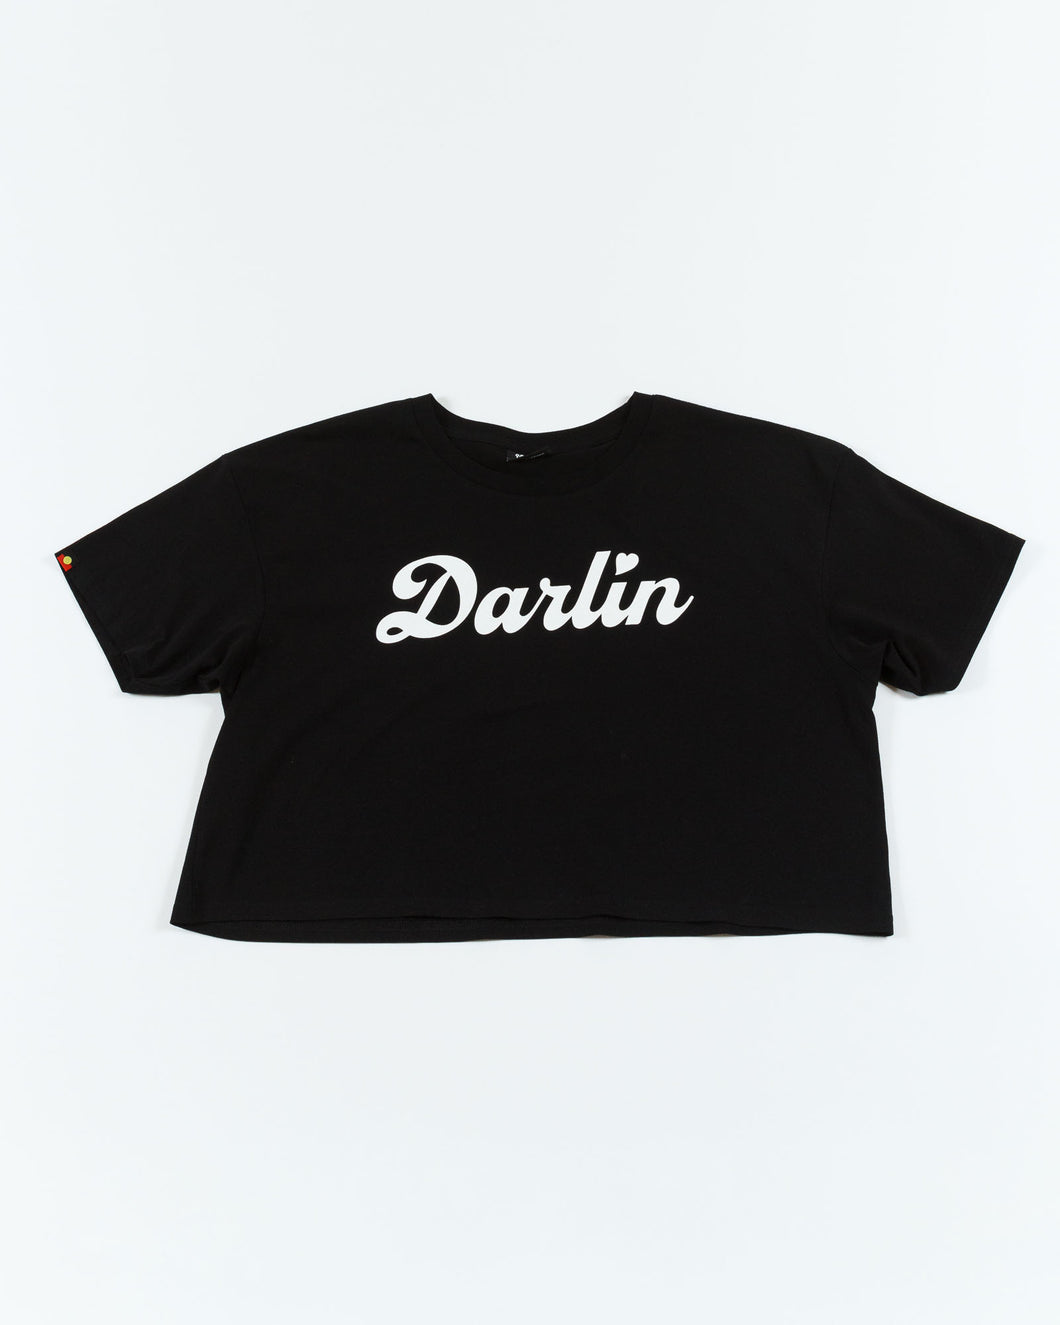 Darlin Tee - Black